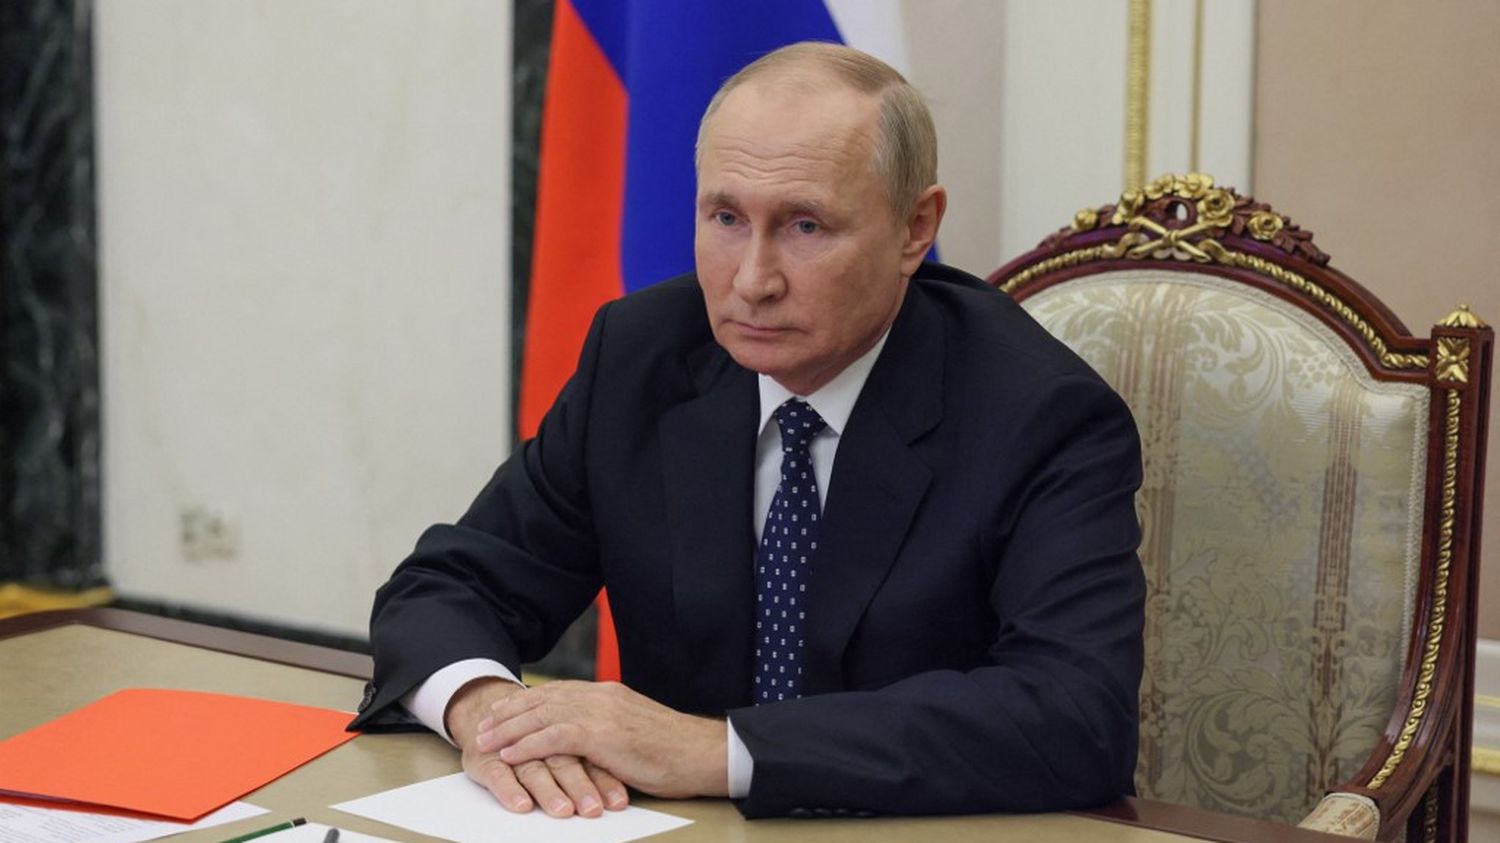 War in Ukraine: Vladimir Putin increases penalties for surrender or refusal to fight
